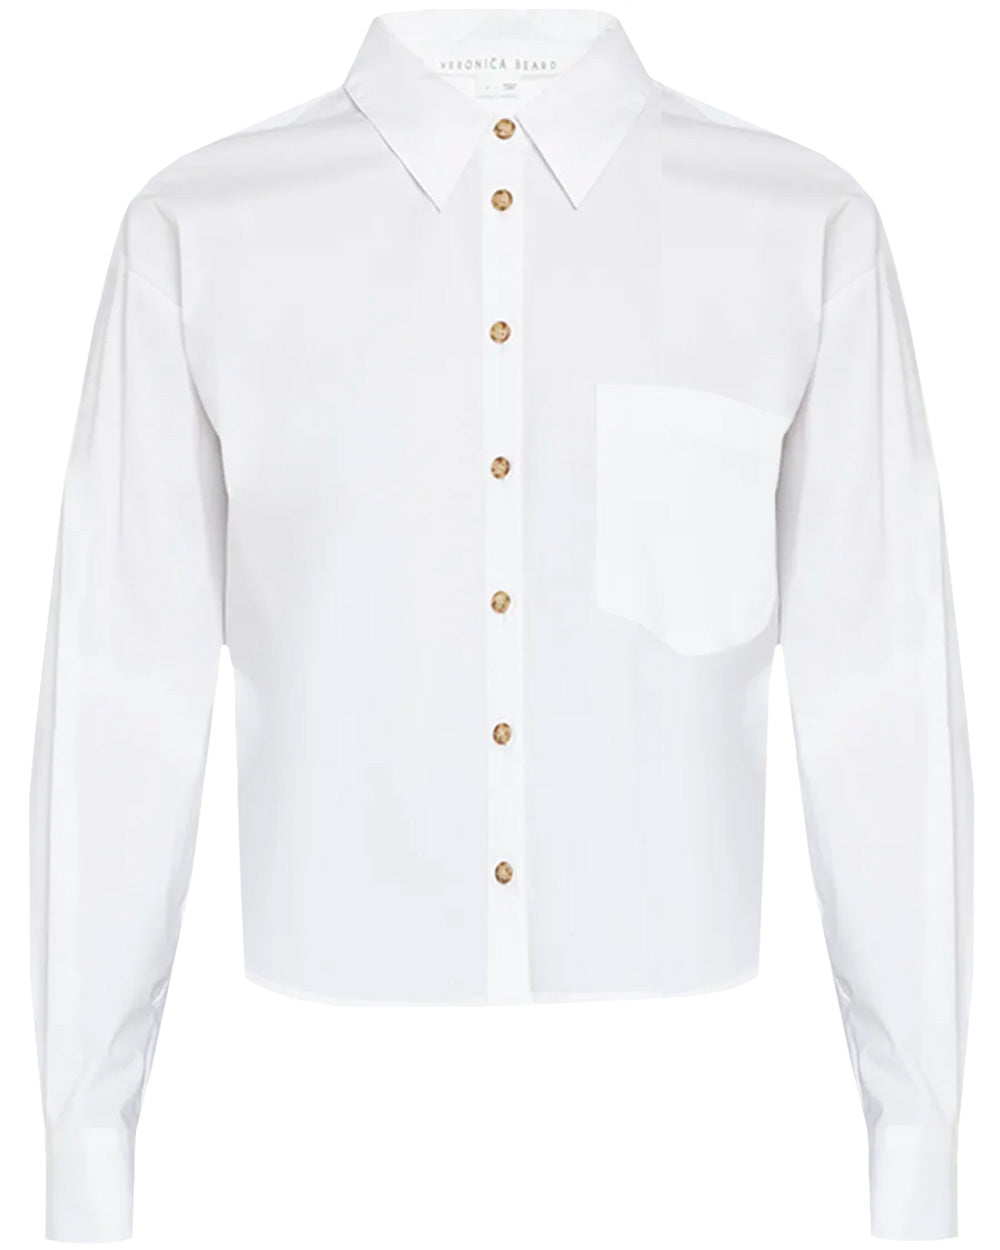 White Aderes Shirt